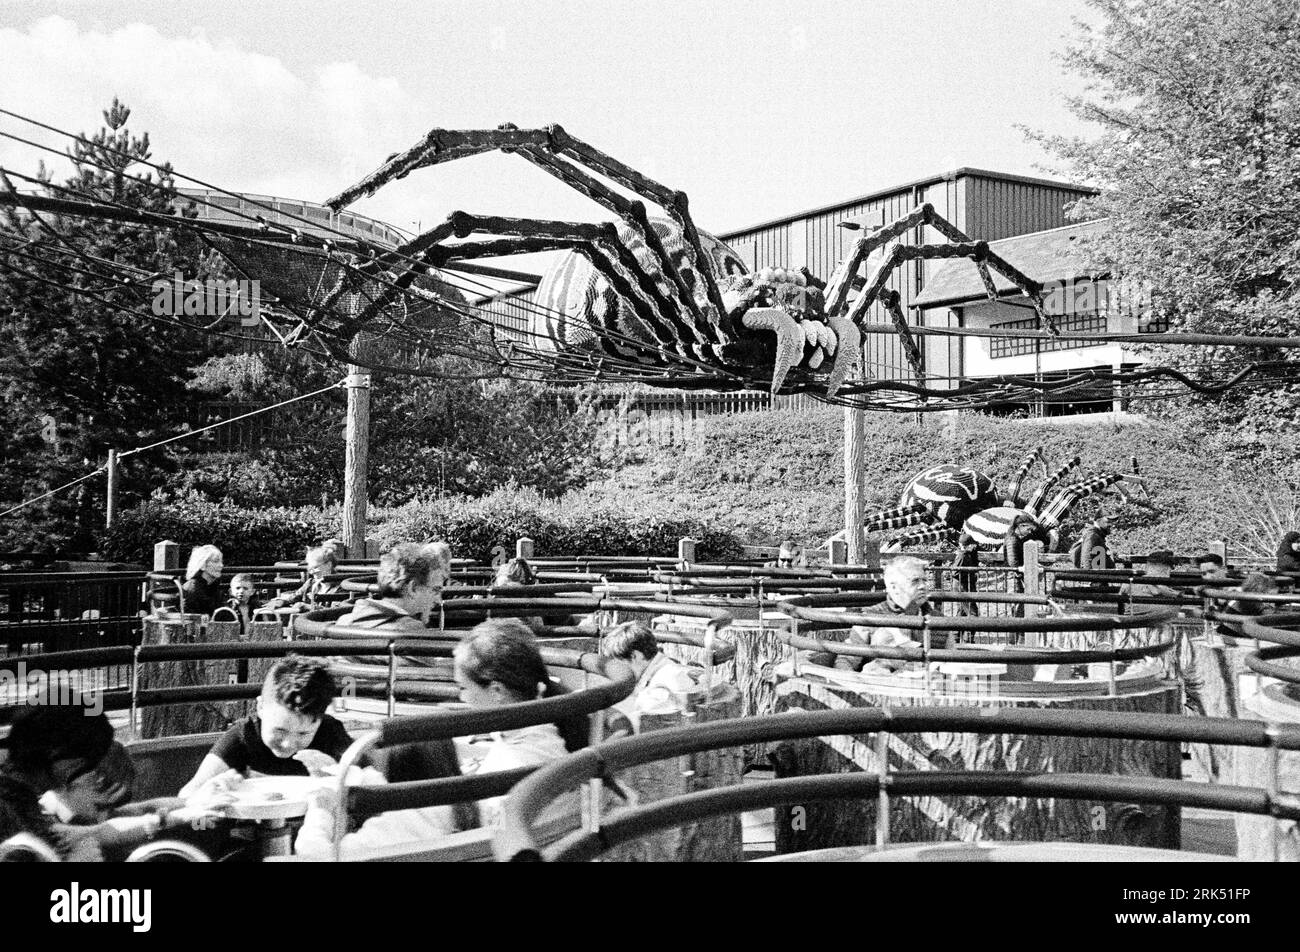 Spinning Spider ride at Legoland Windsor resort, London, England, United Kingdom. Stock Photo